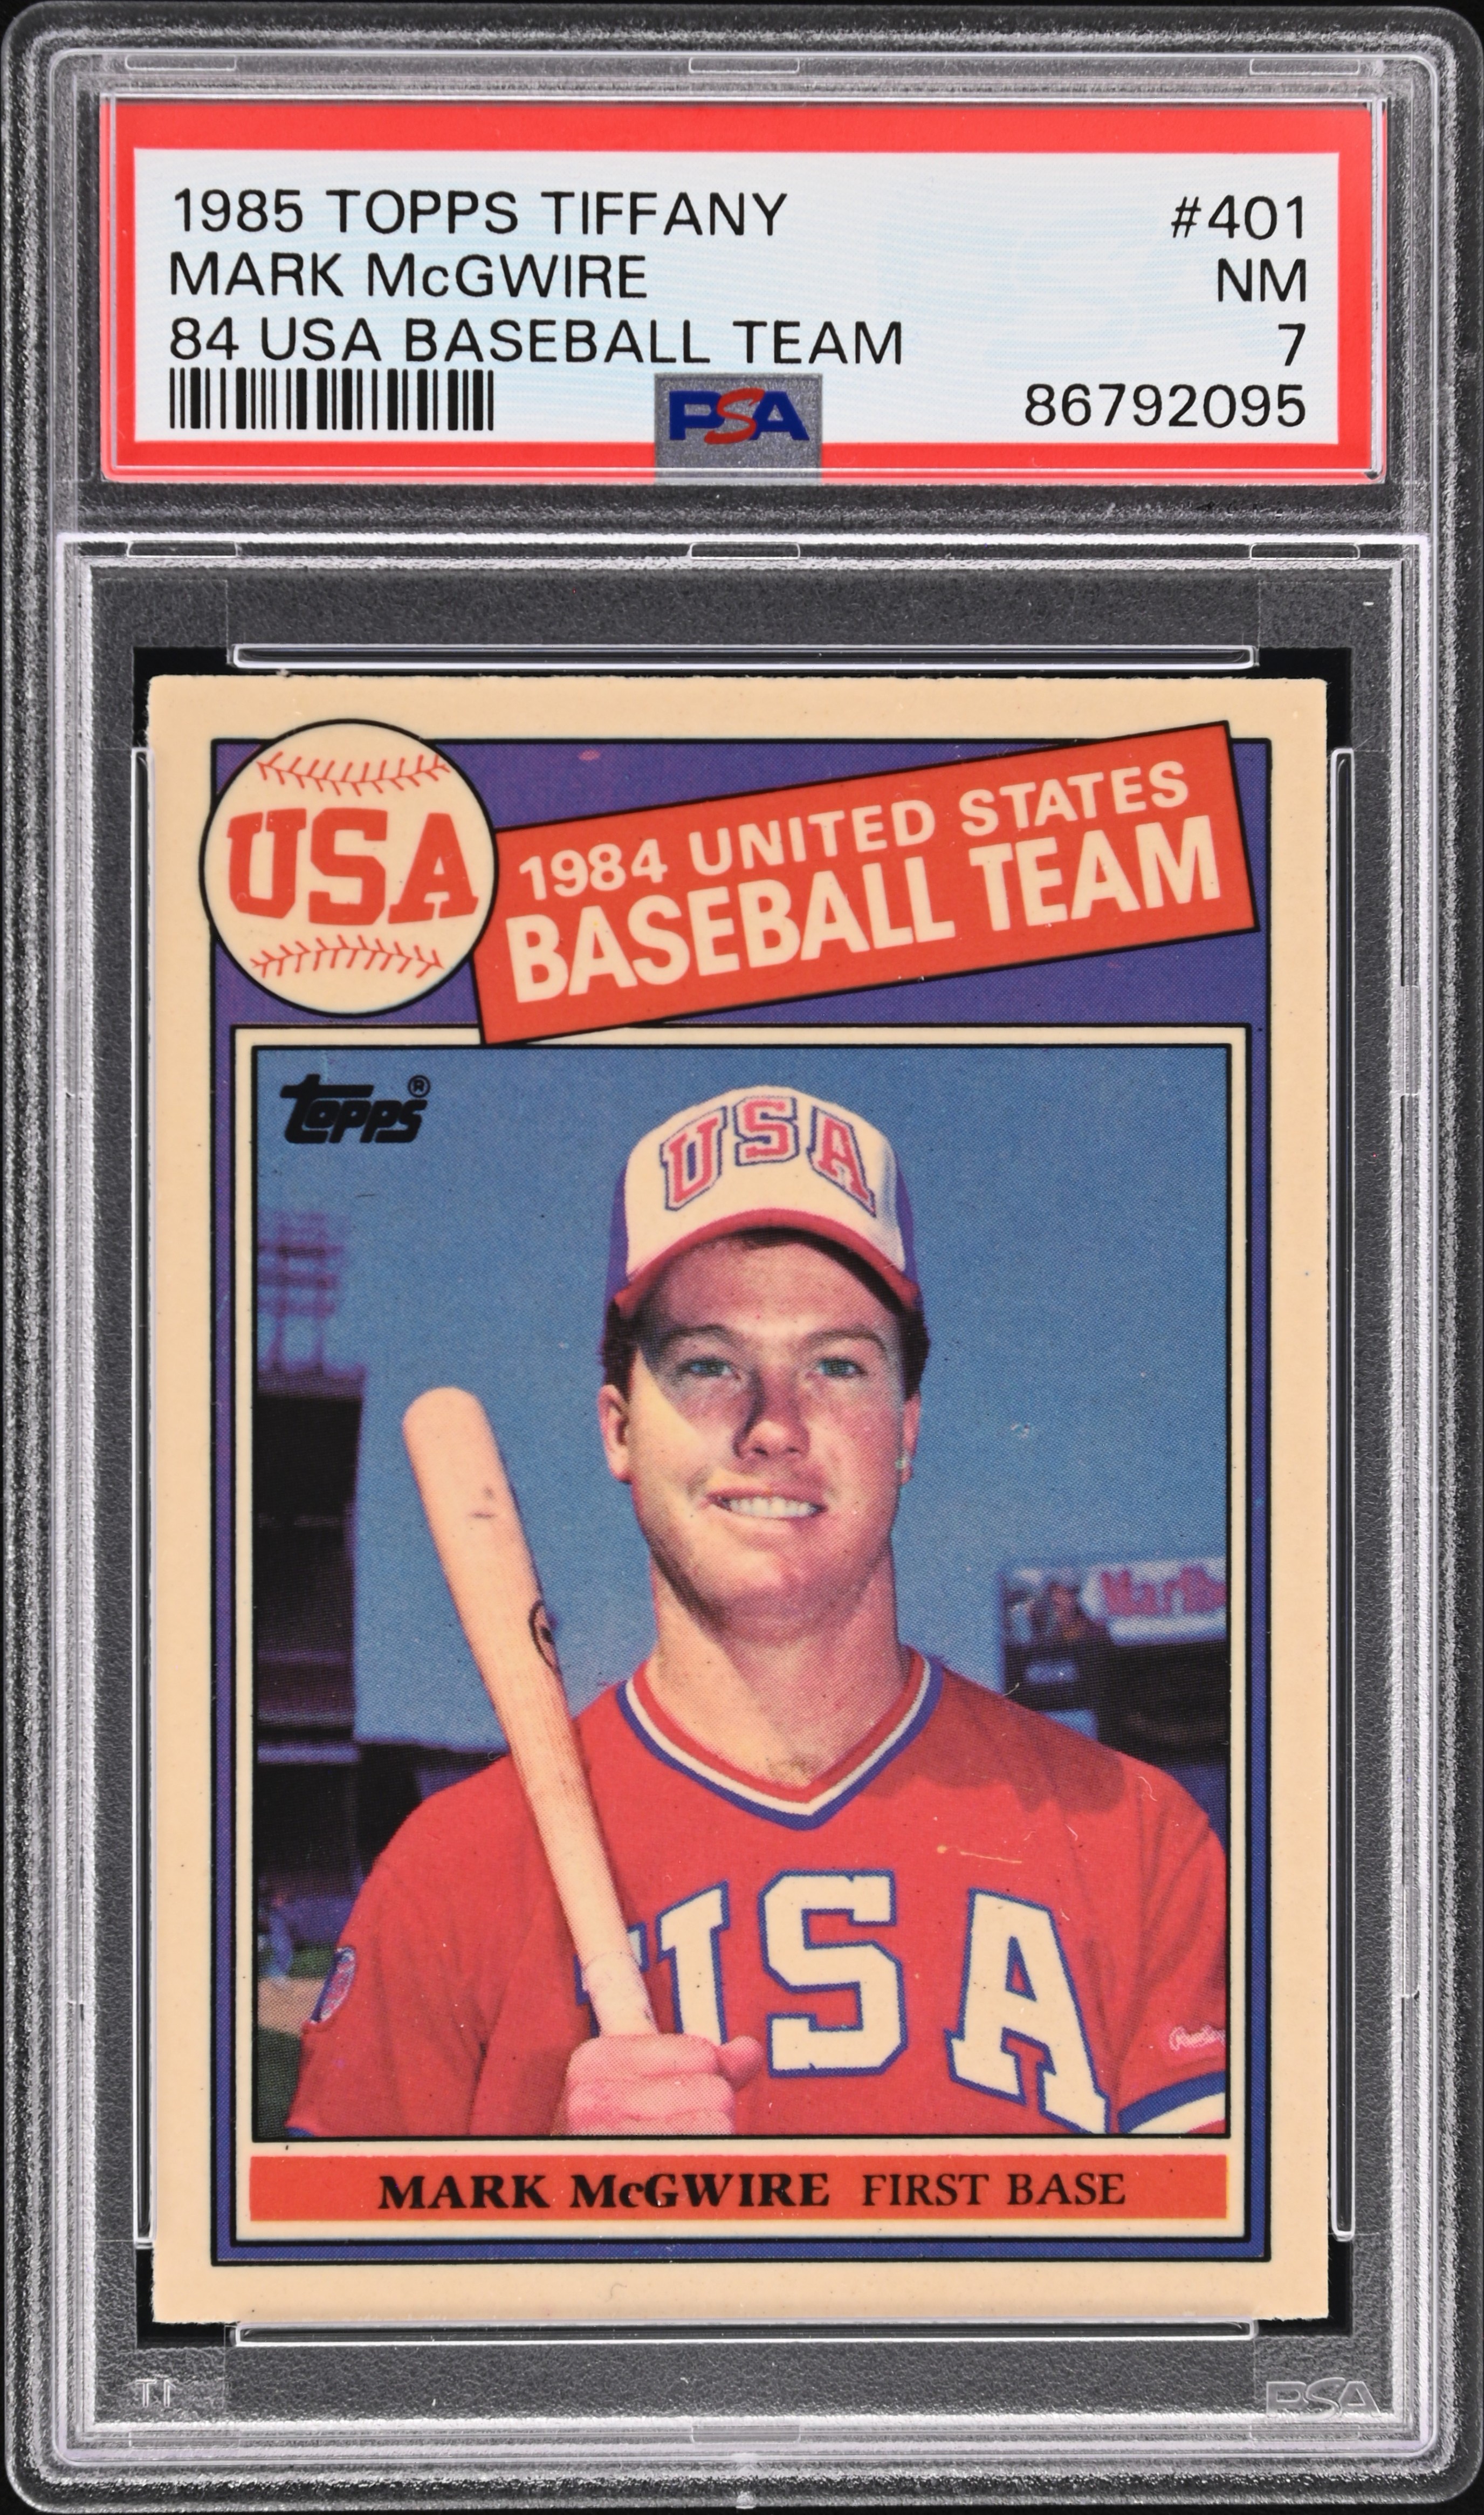 1985 Topps Tiffany 84 USA Baseball Team #401 Mark McGwire Rookie Card – PSA NM 7